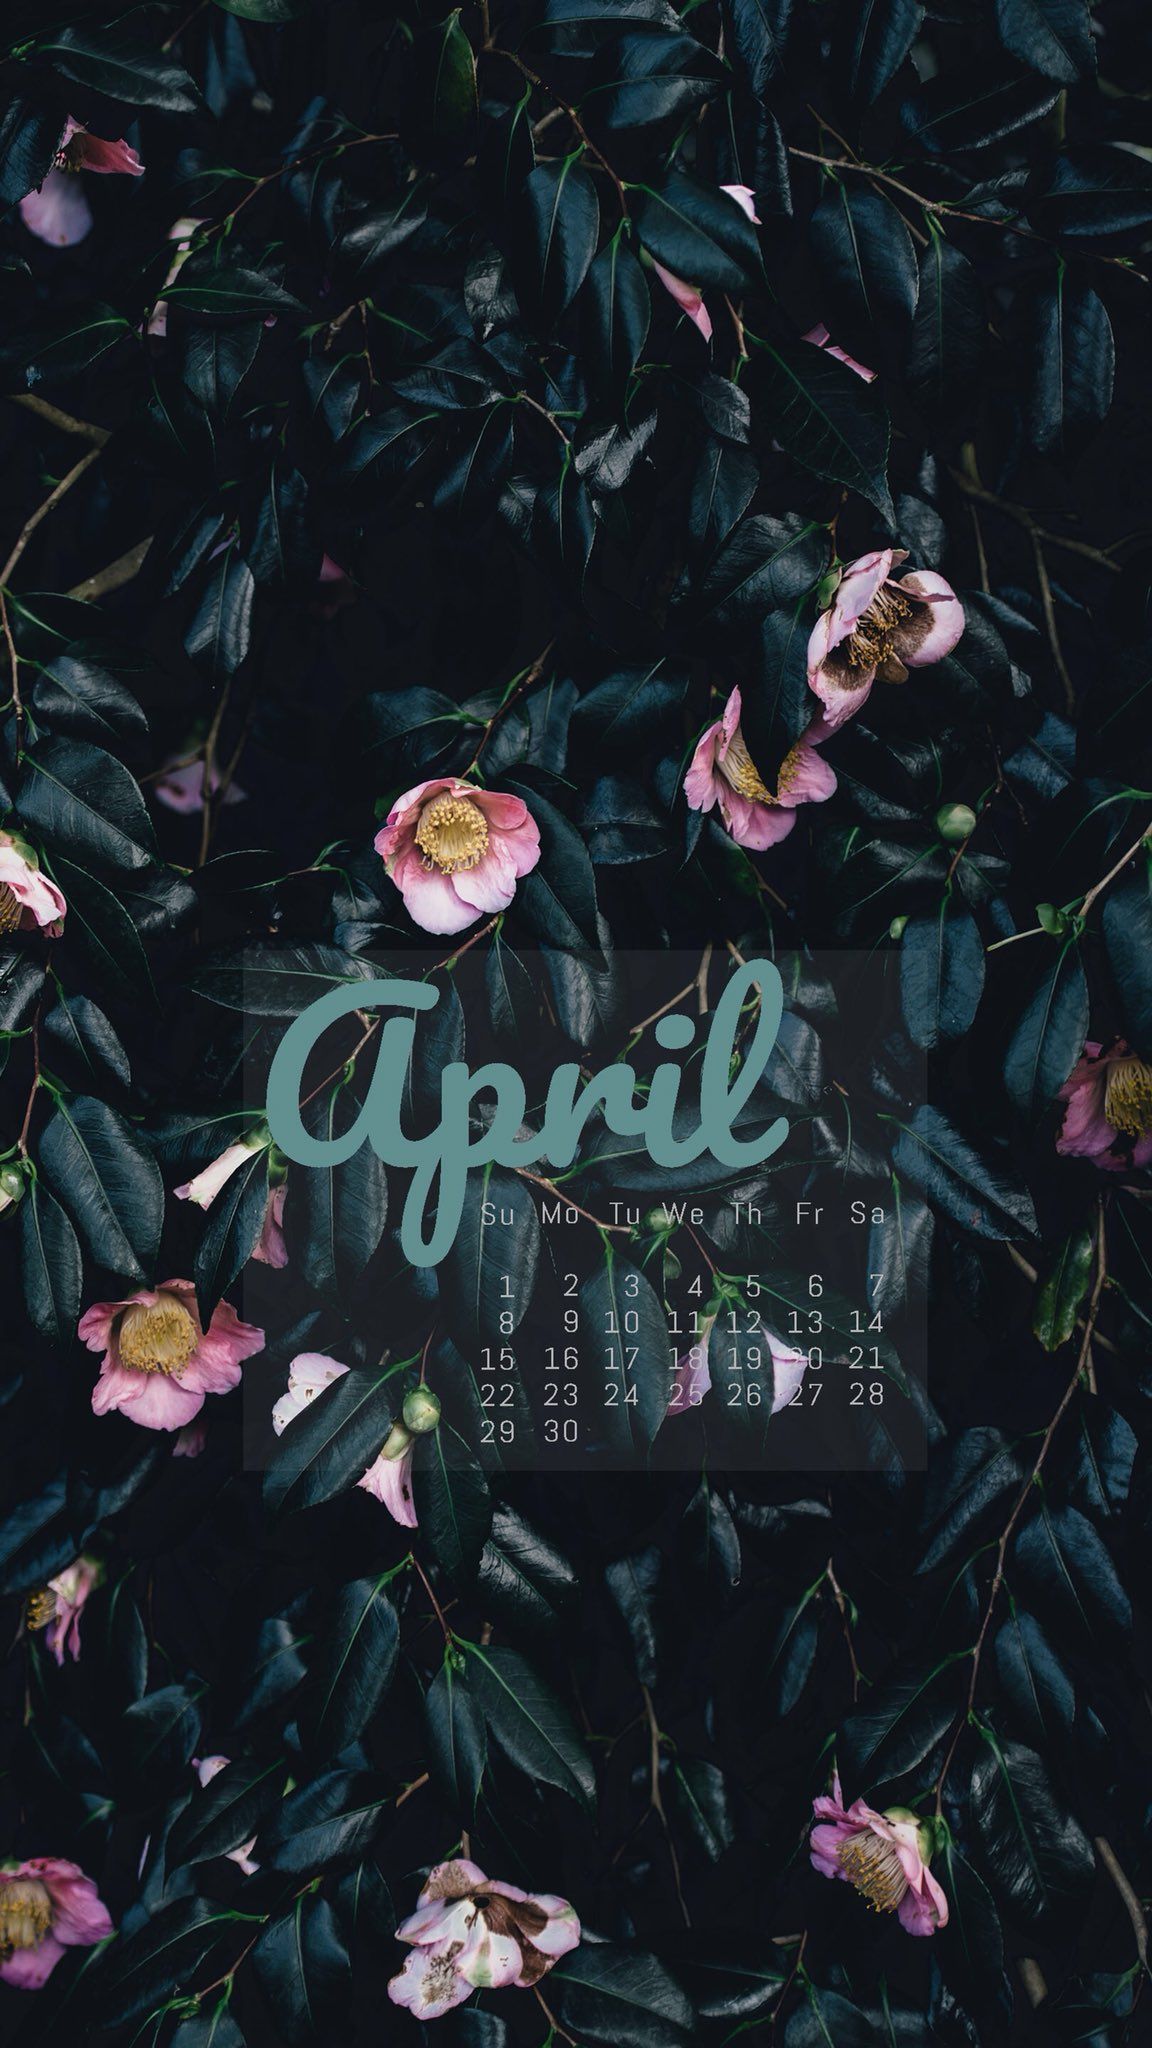  Zedge Hintergrundbild 1152x2048. ZEDGE on X: Get your phone ready for April with a calendar wallpaper or lockscreen made by Zedge! See on Zedge Premium! #april #calendar #flowers #bushes #spring #springtime #dates #days #markyourcalendars #digitalart #